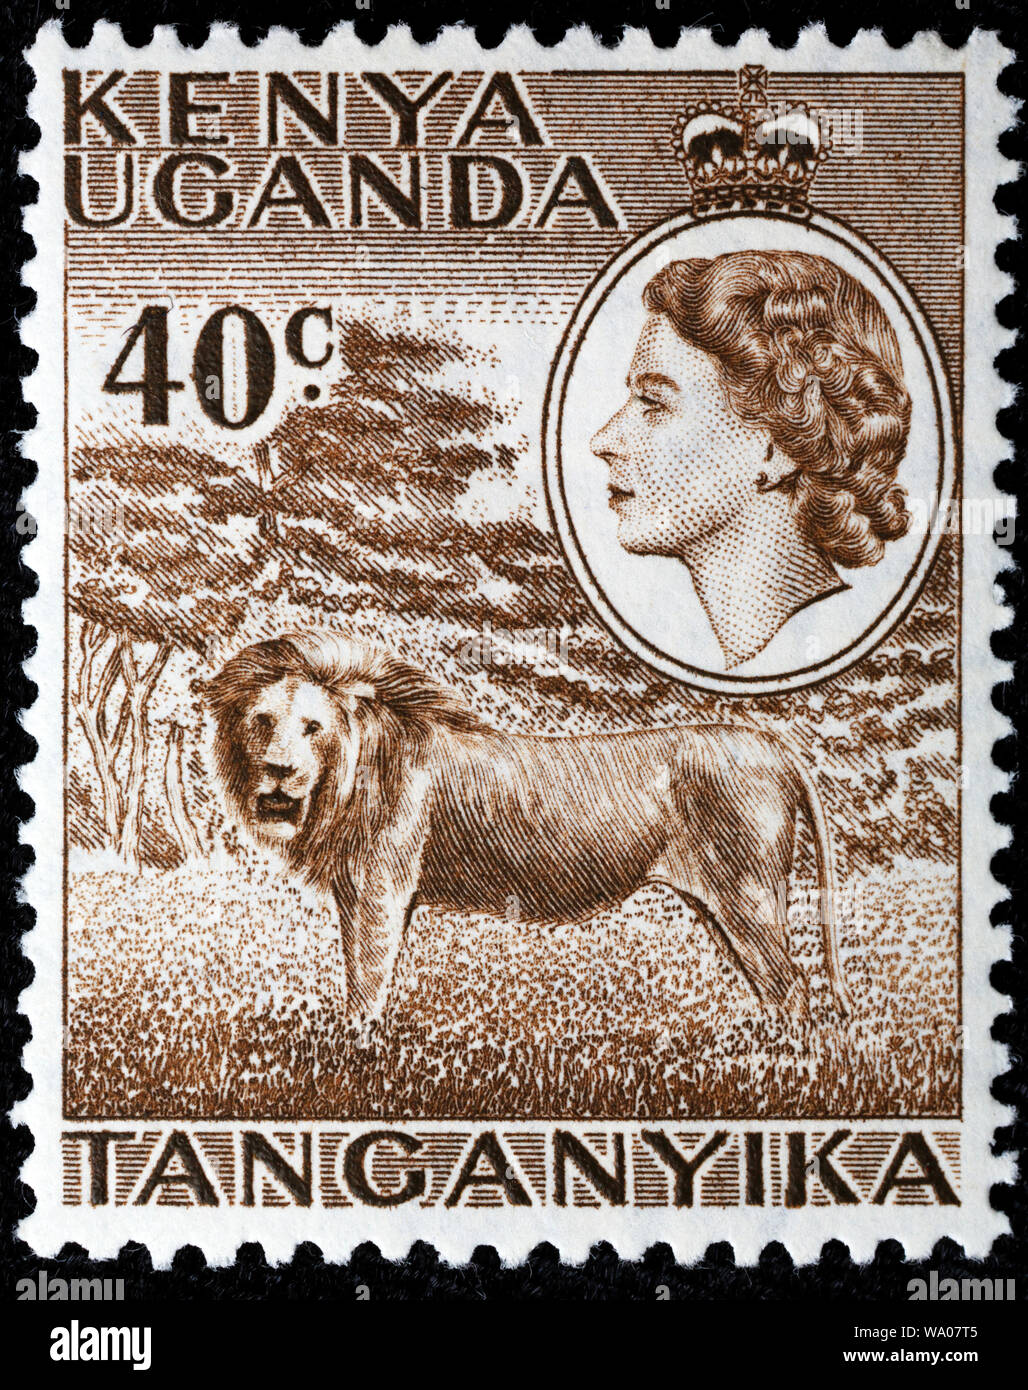 León, Panthera leo, el sello, el África Oriental Británica, Kenya, Uganda, Tanganyka, 1958 Foto de stock